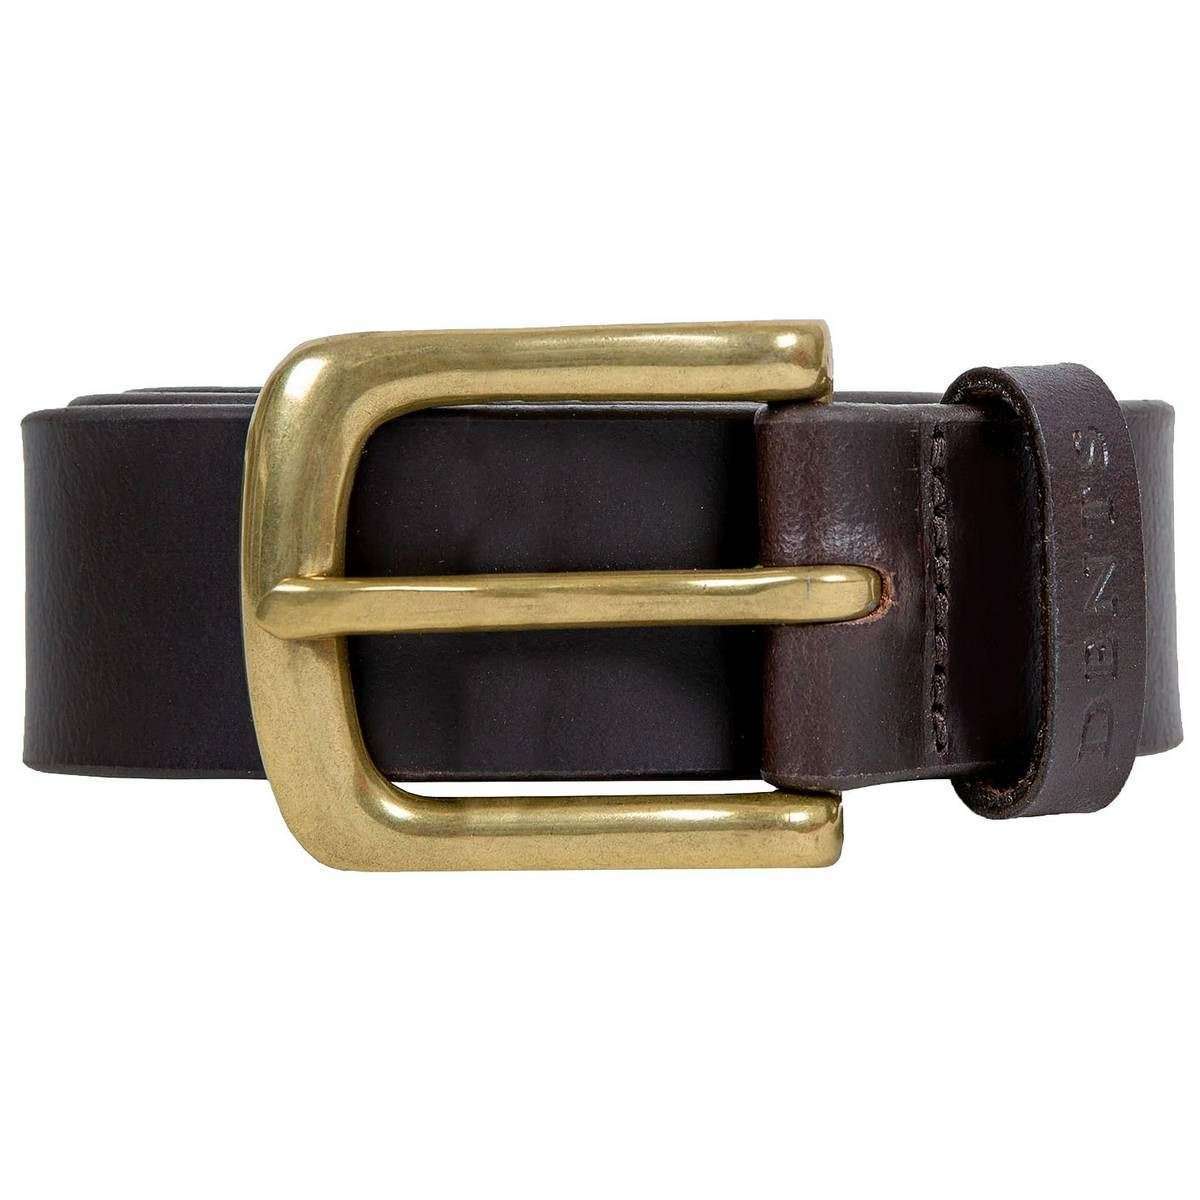 Dents Heritage Smooth Leather Belt - Brown - Medium - 34-36" | 86-91cm